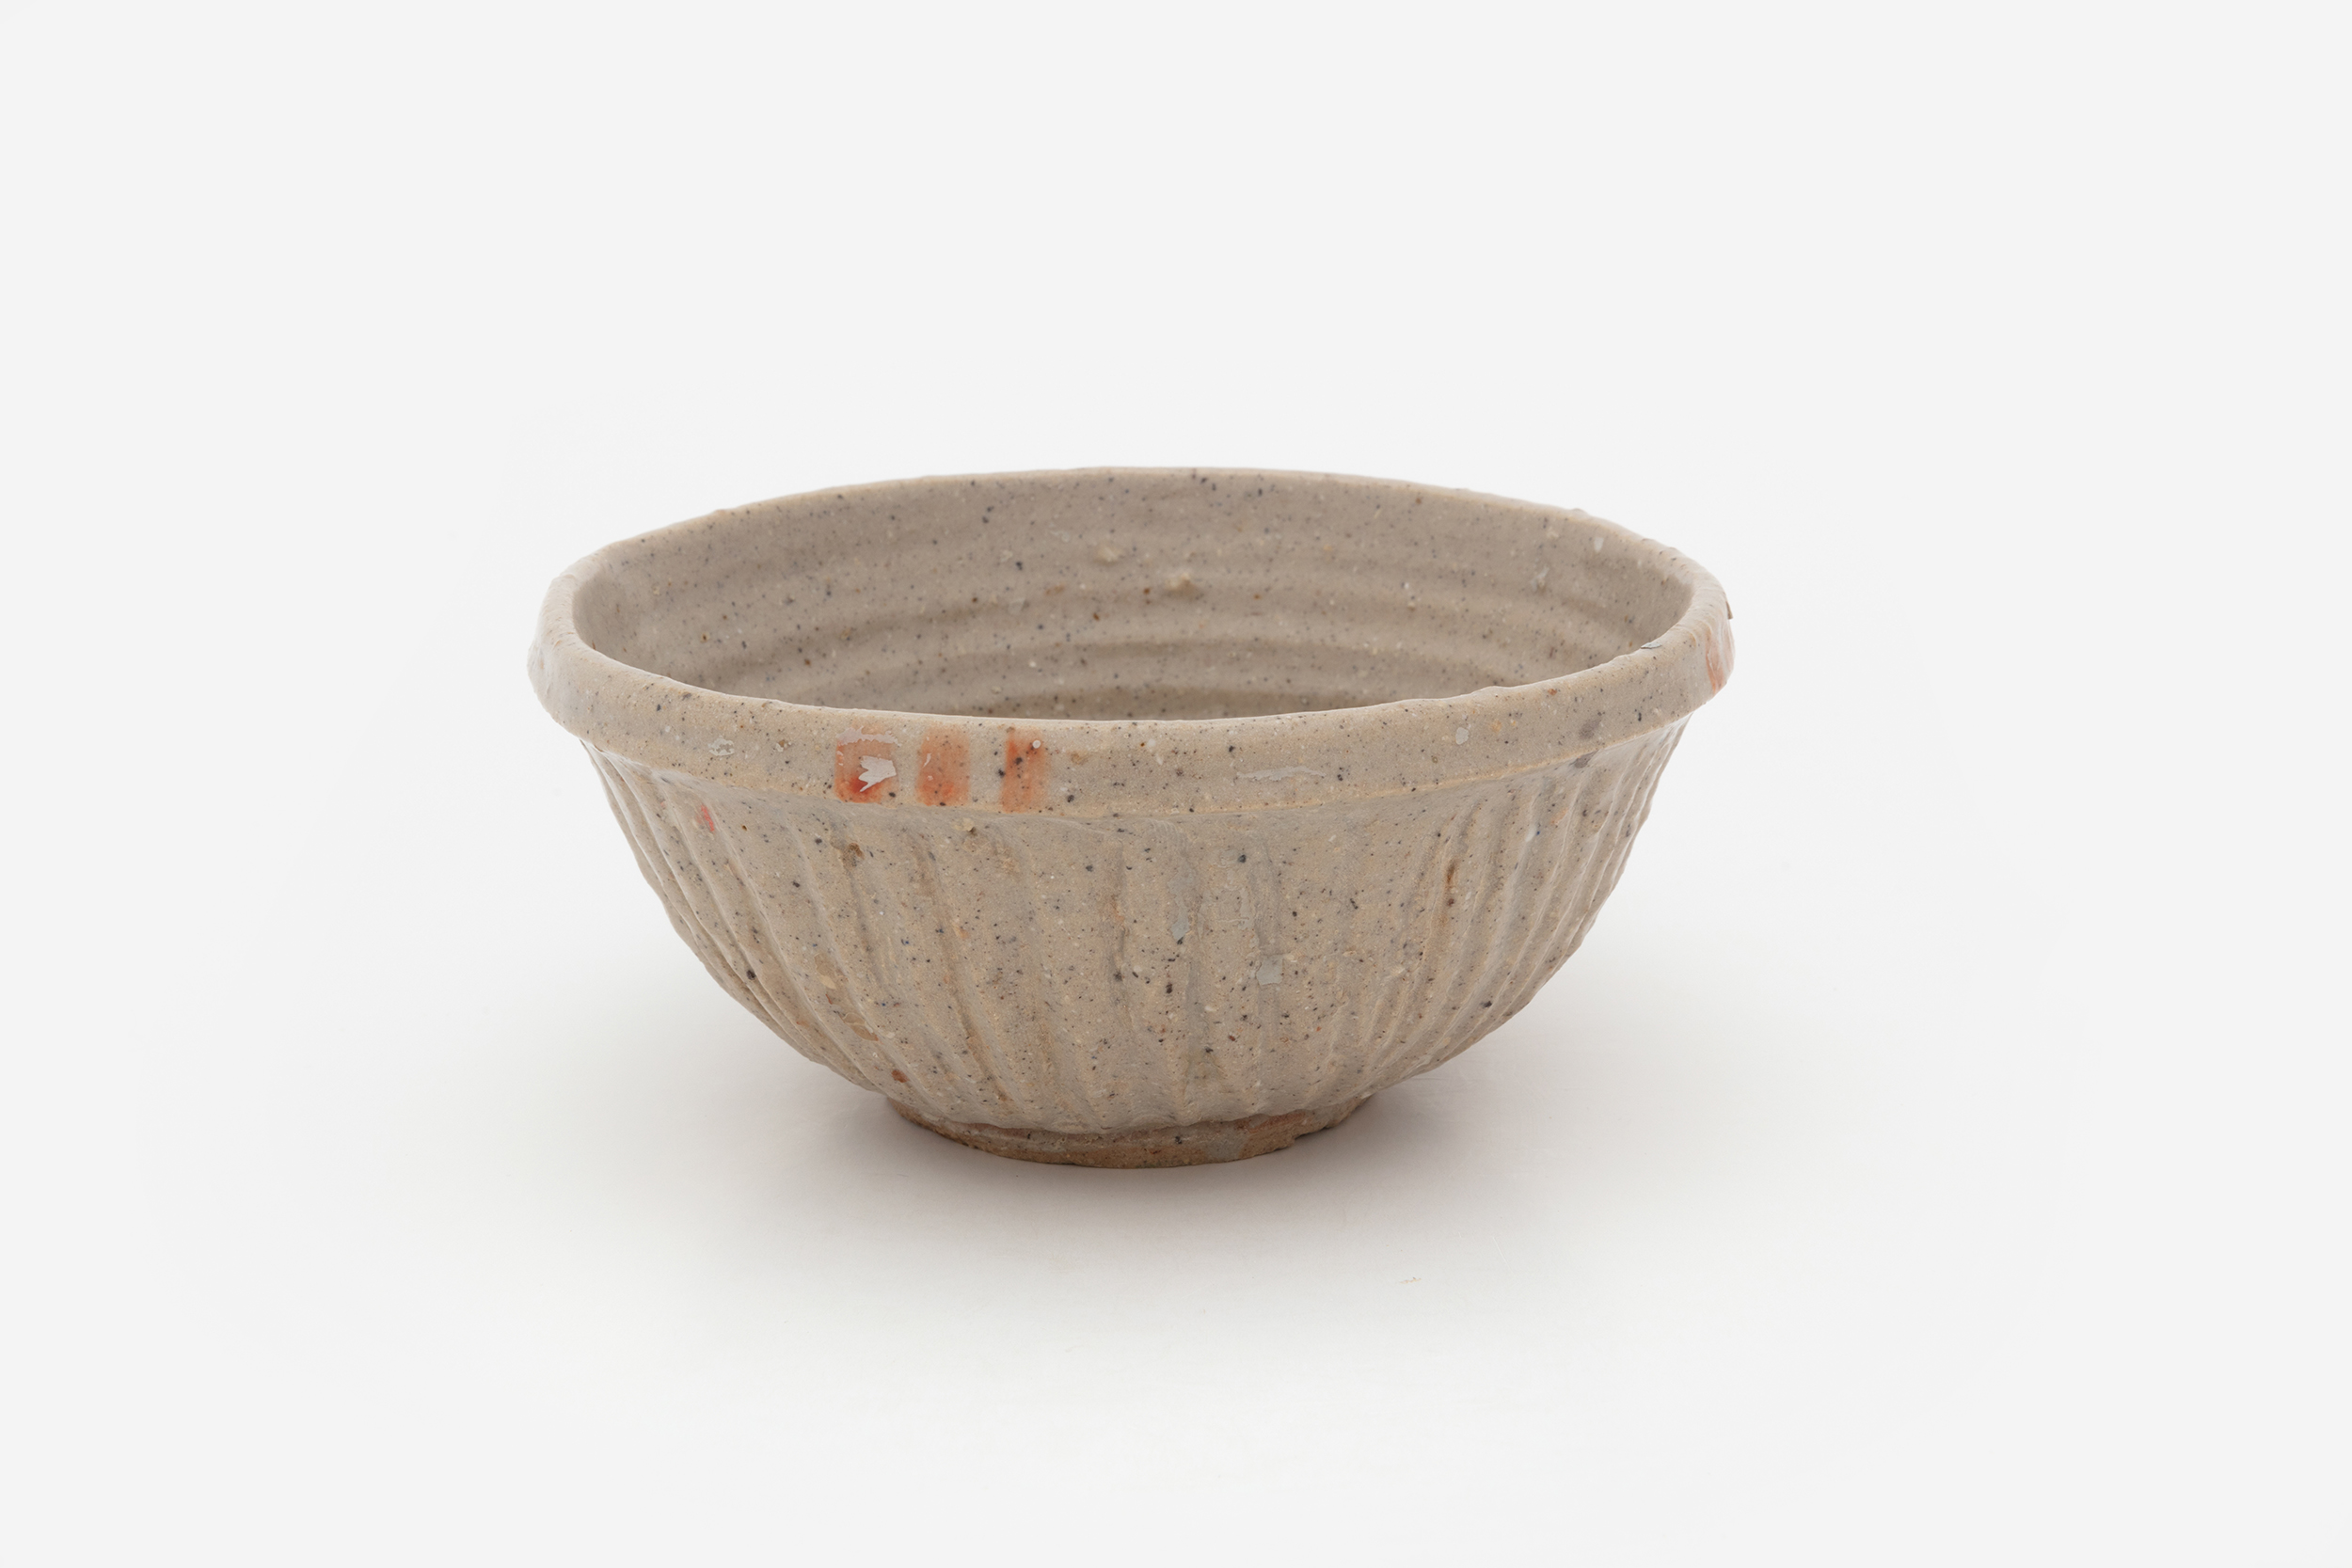 Hylton Nel - Small bowl I, 